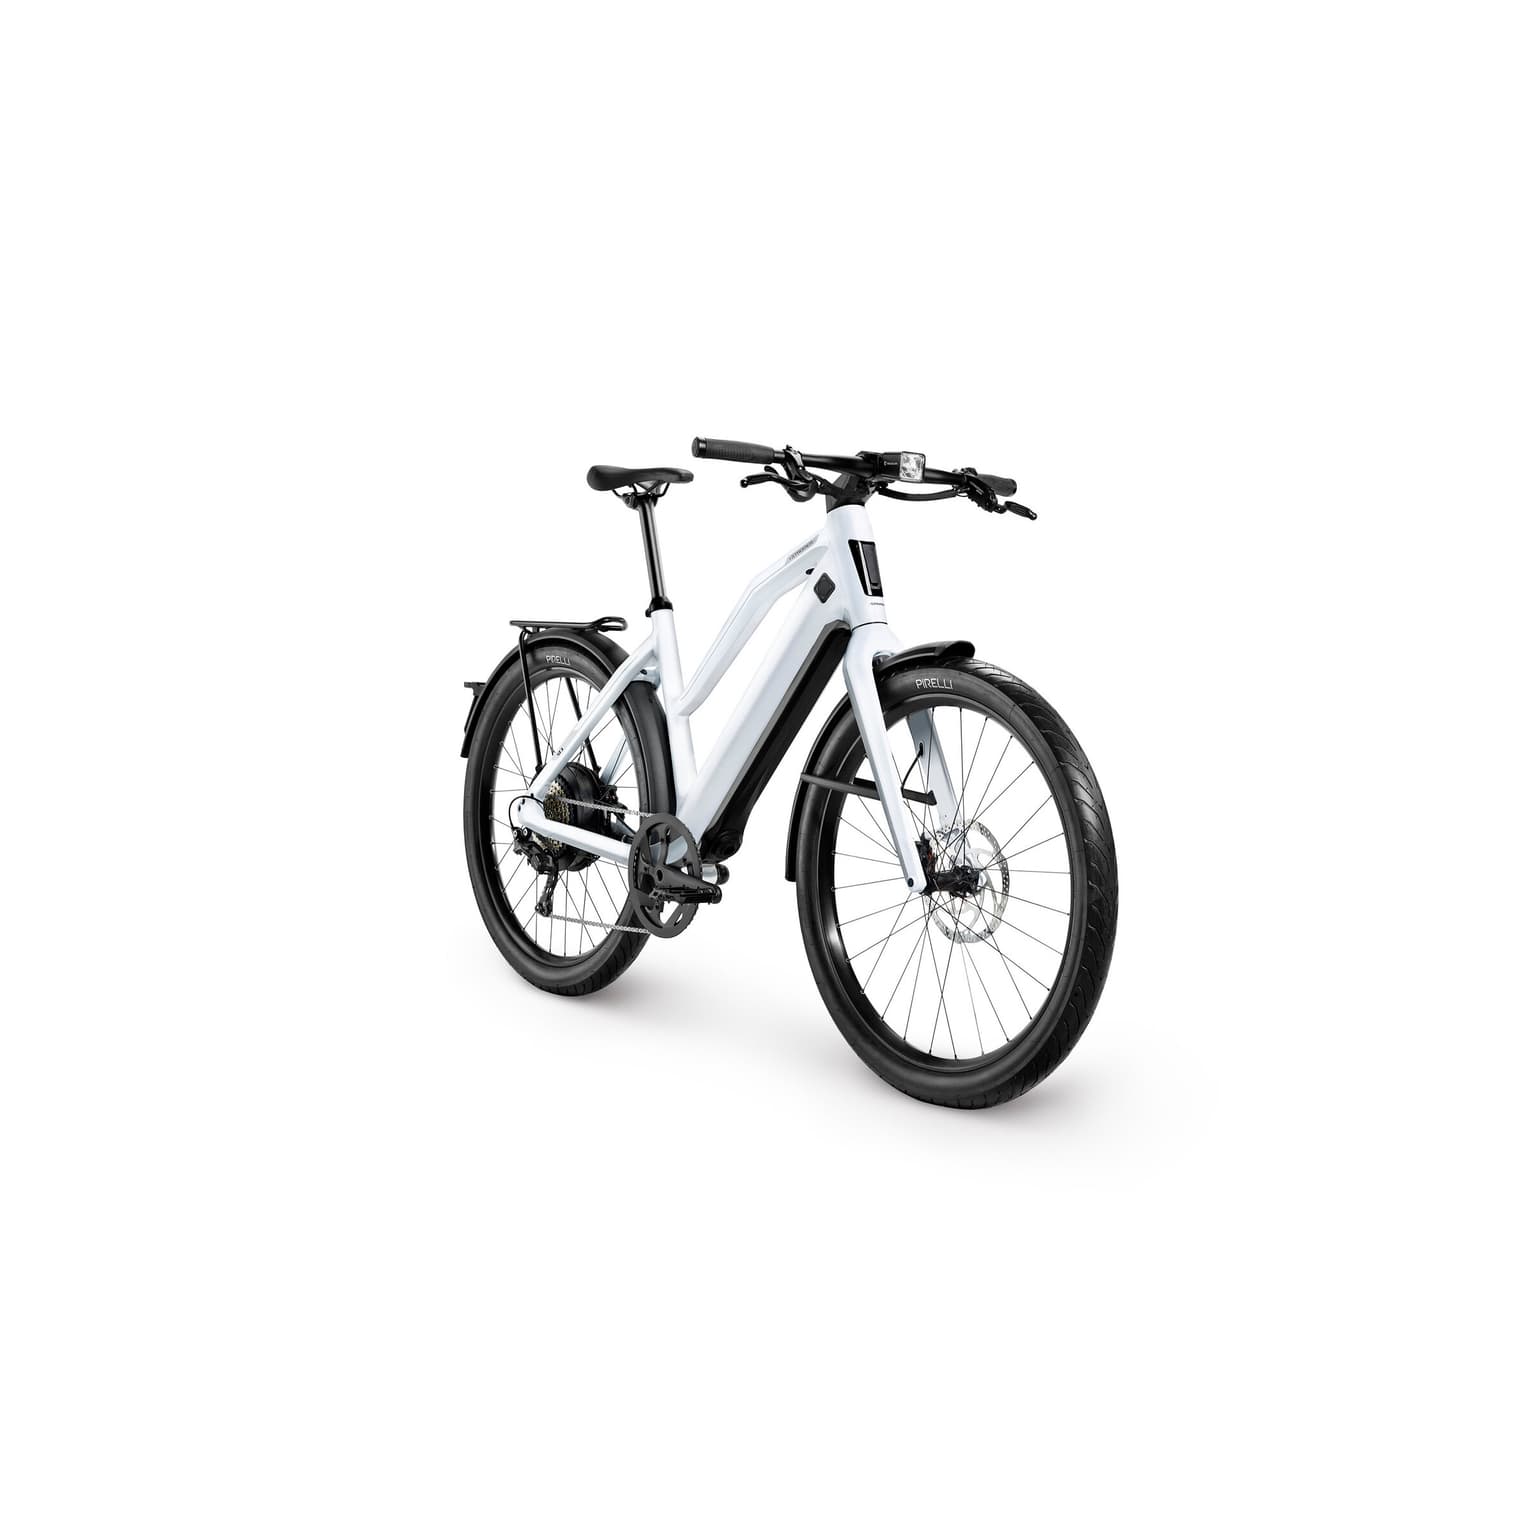 Stromer Stromer ST3 Comfort E-Bike 45km/h weiss 2